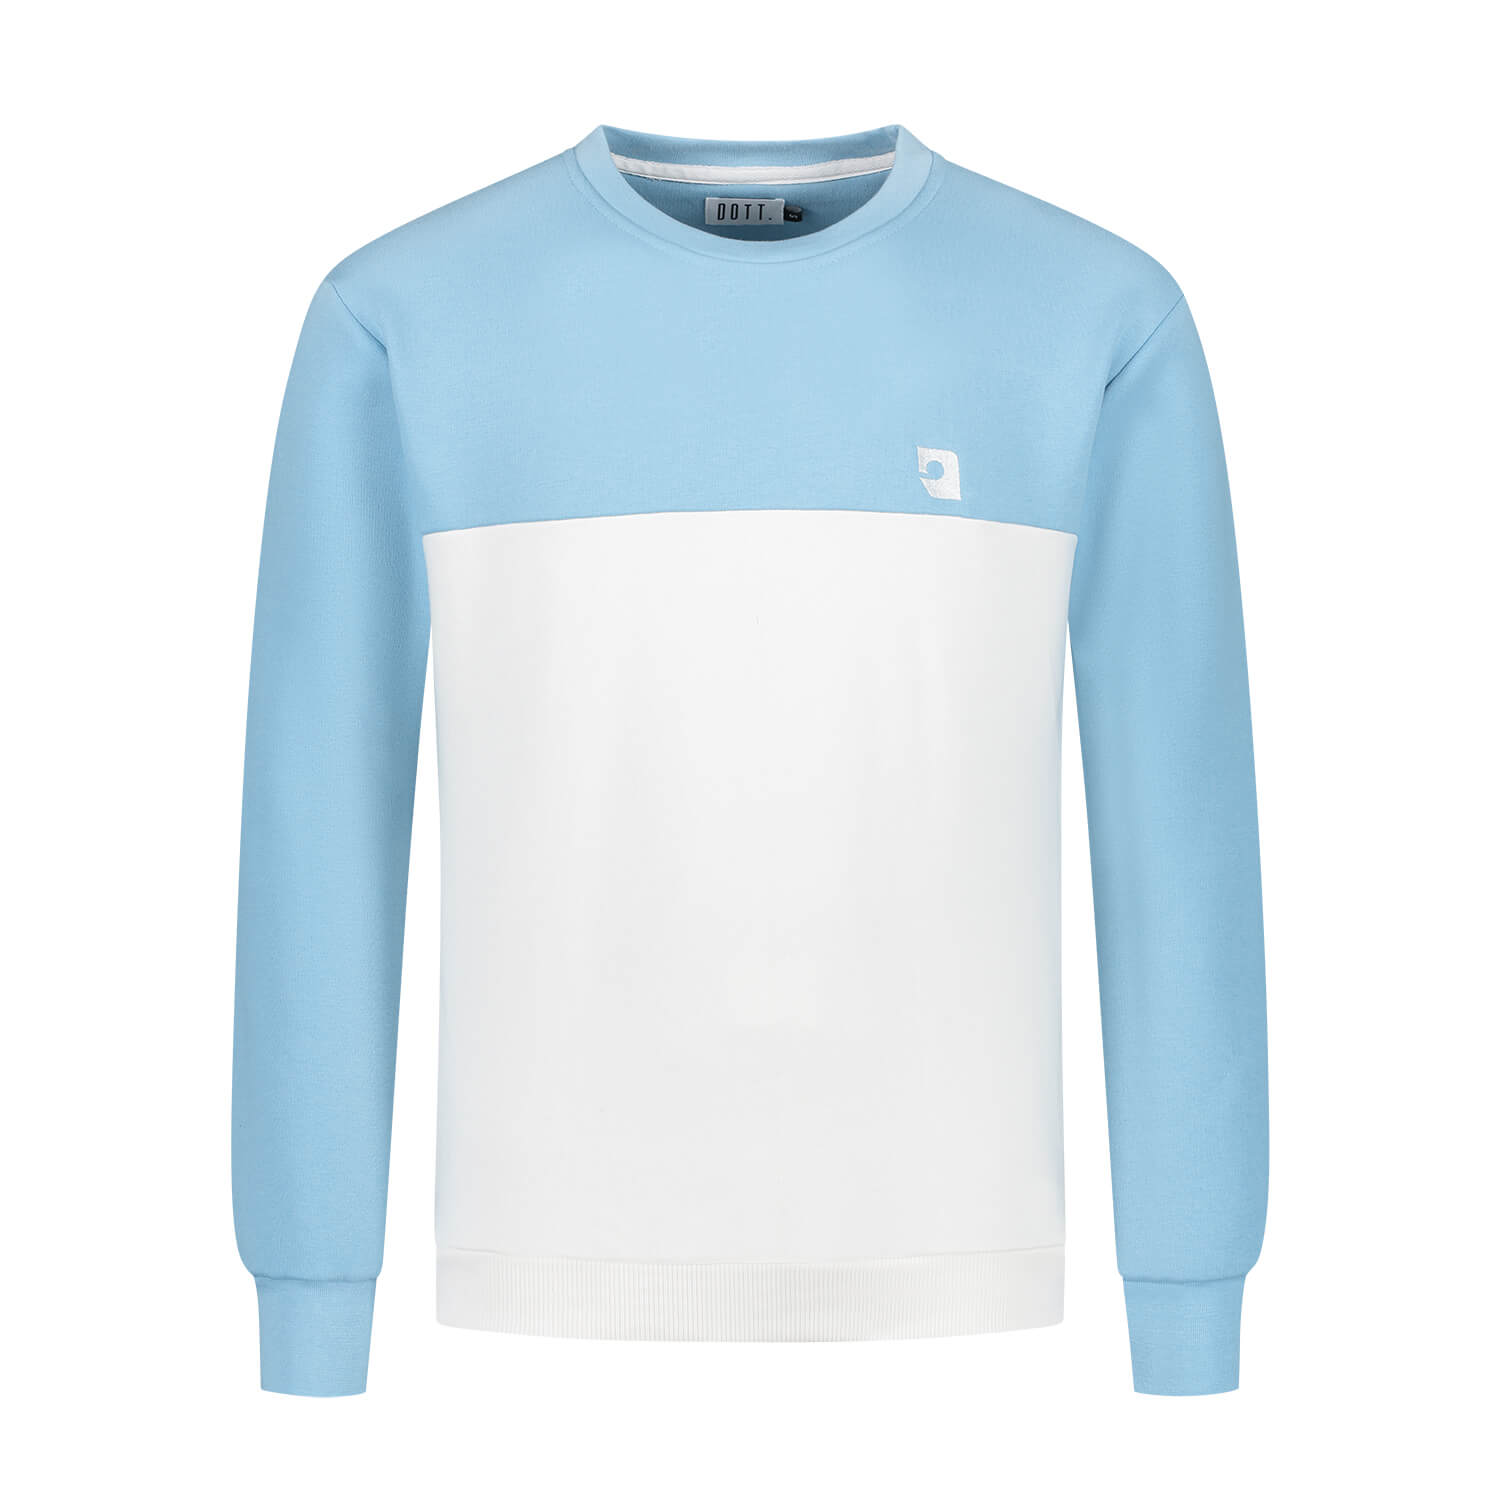 Men's organic sweatshirt - colorblock blue/white